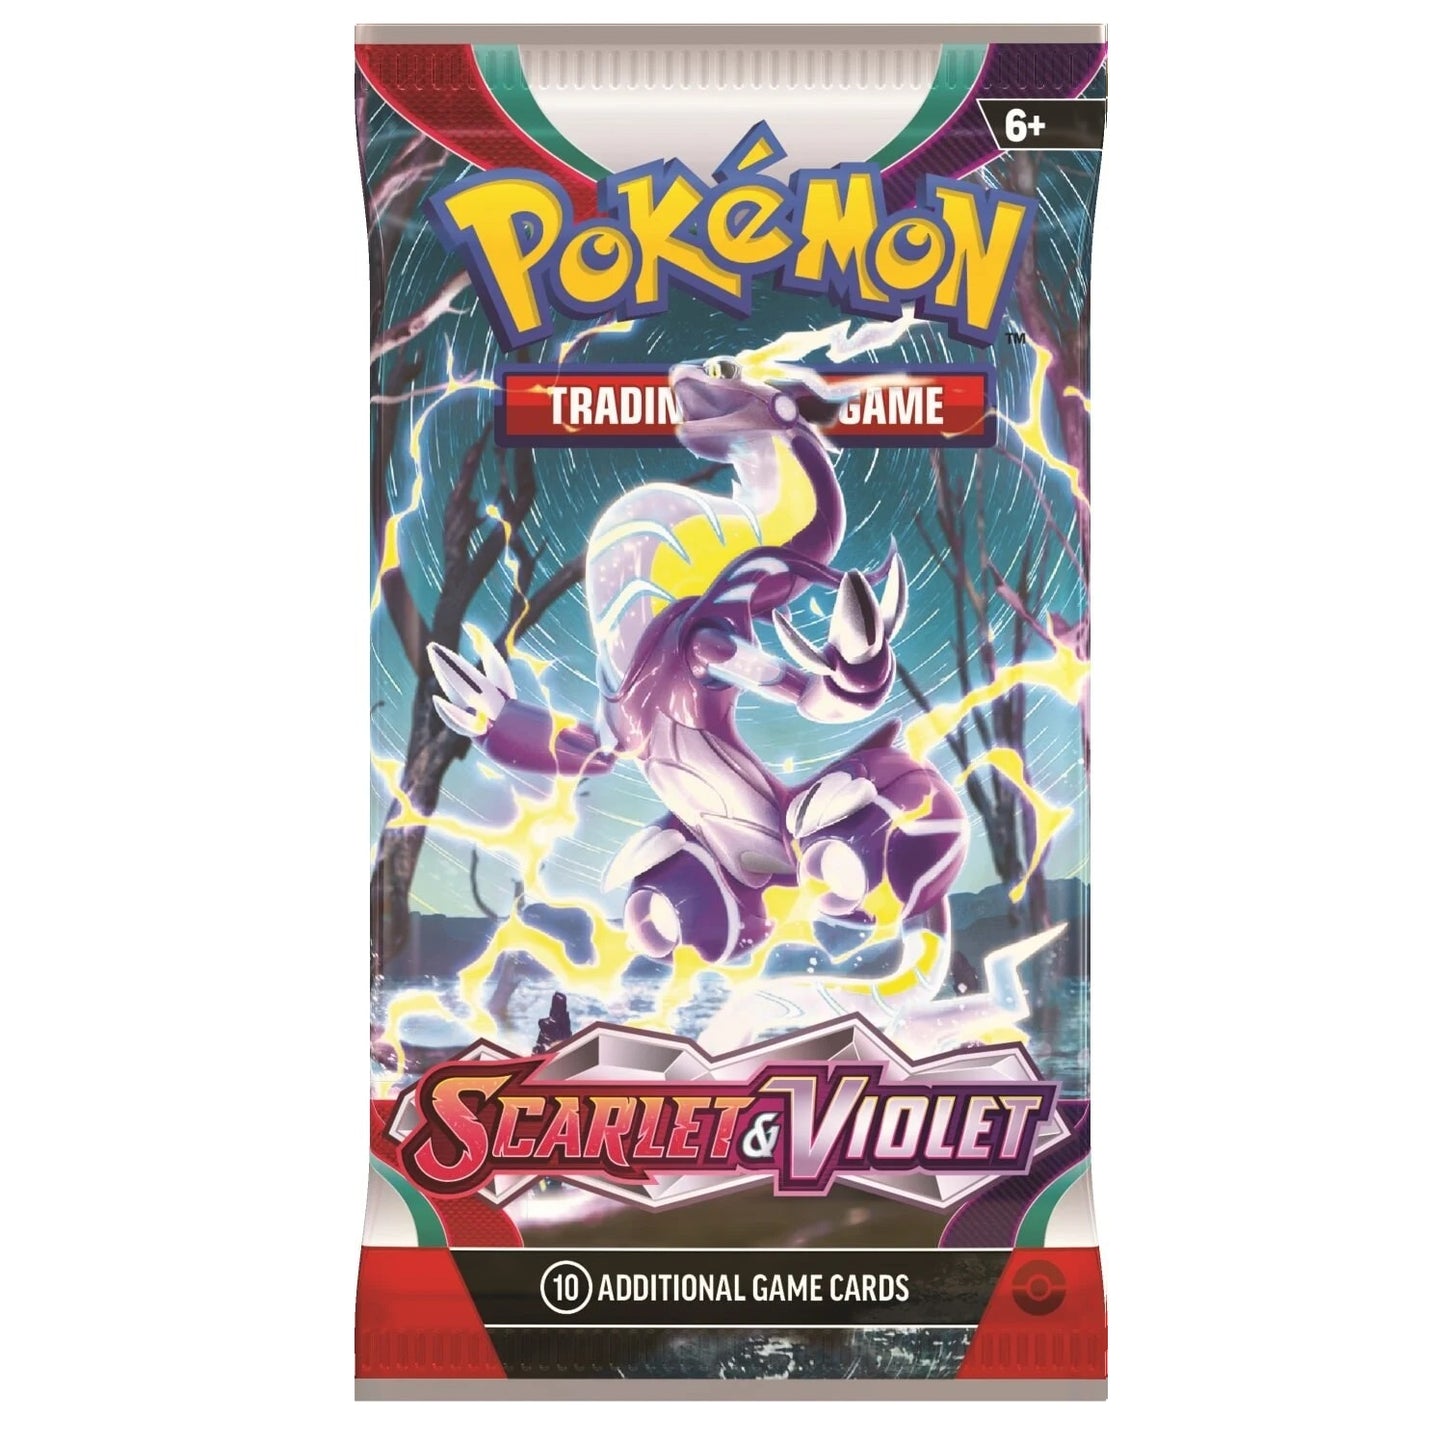 Pokémon TCG - Scarlet & Violet Booster Box